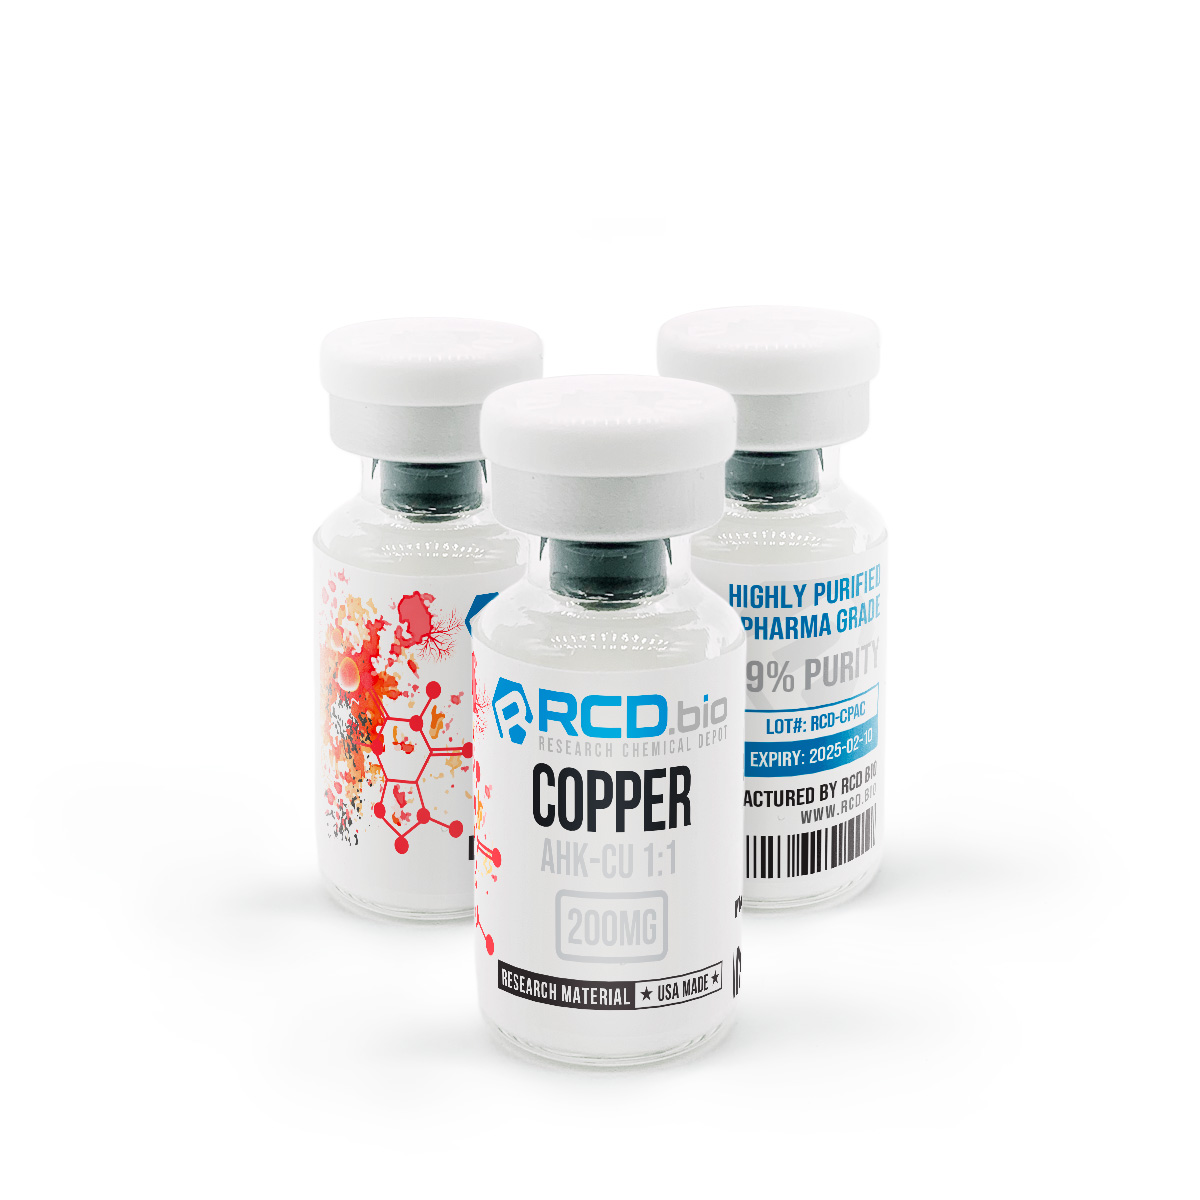 Copper Peptide AHK- Cu 1:1 For Sale | Fast Shipping| RCD.bio